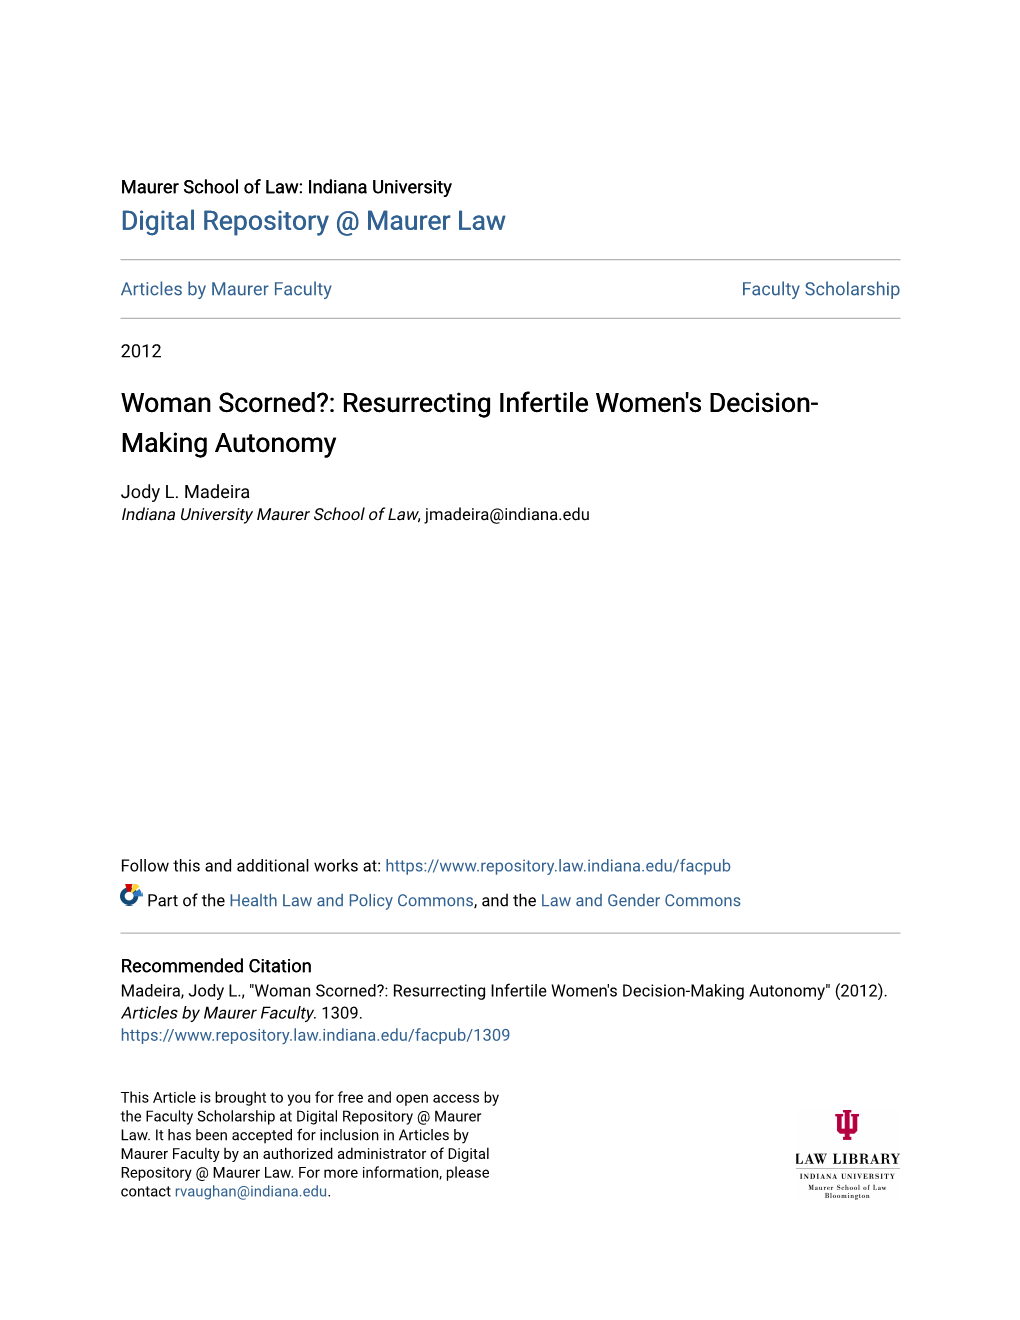 Woman Scorned?: Resurrecting Infertile Women's Decision- Making Autonomy